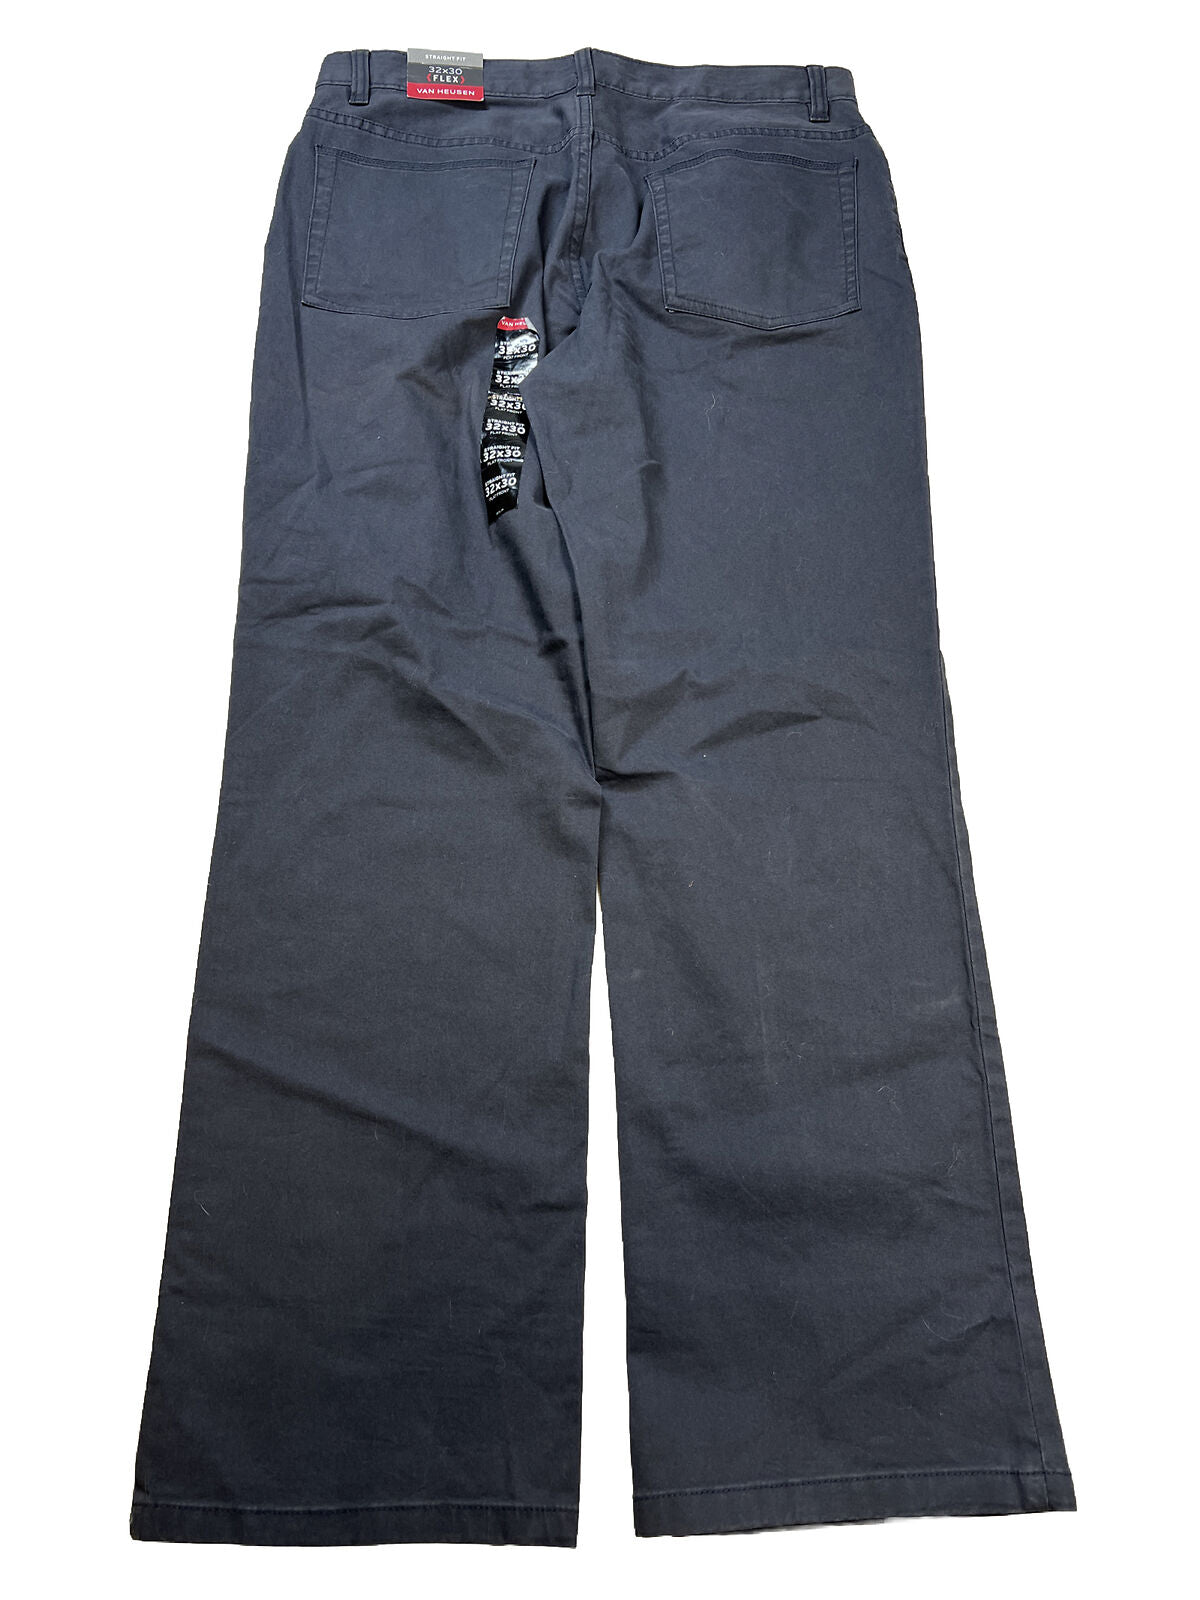 NEW Van Heusen Men's Gray Flex Straight Leg Pants - 32X30